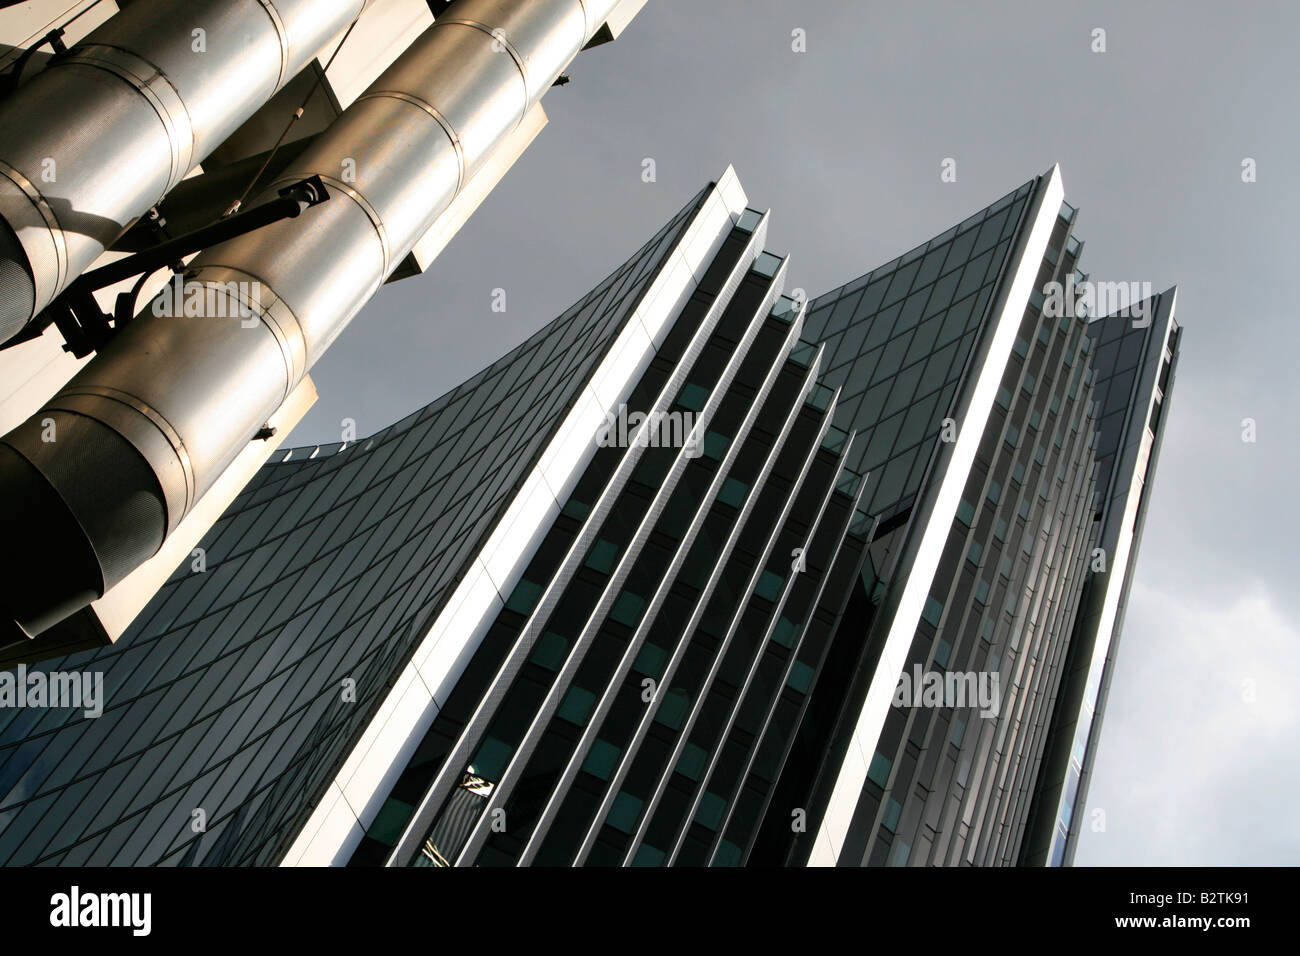 Lloyds building, 51 Lime Street Tower Willis Group Holdings città di Londra Inghilterra Regno unito Gb Foto Stock